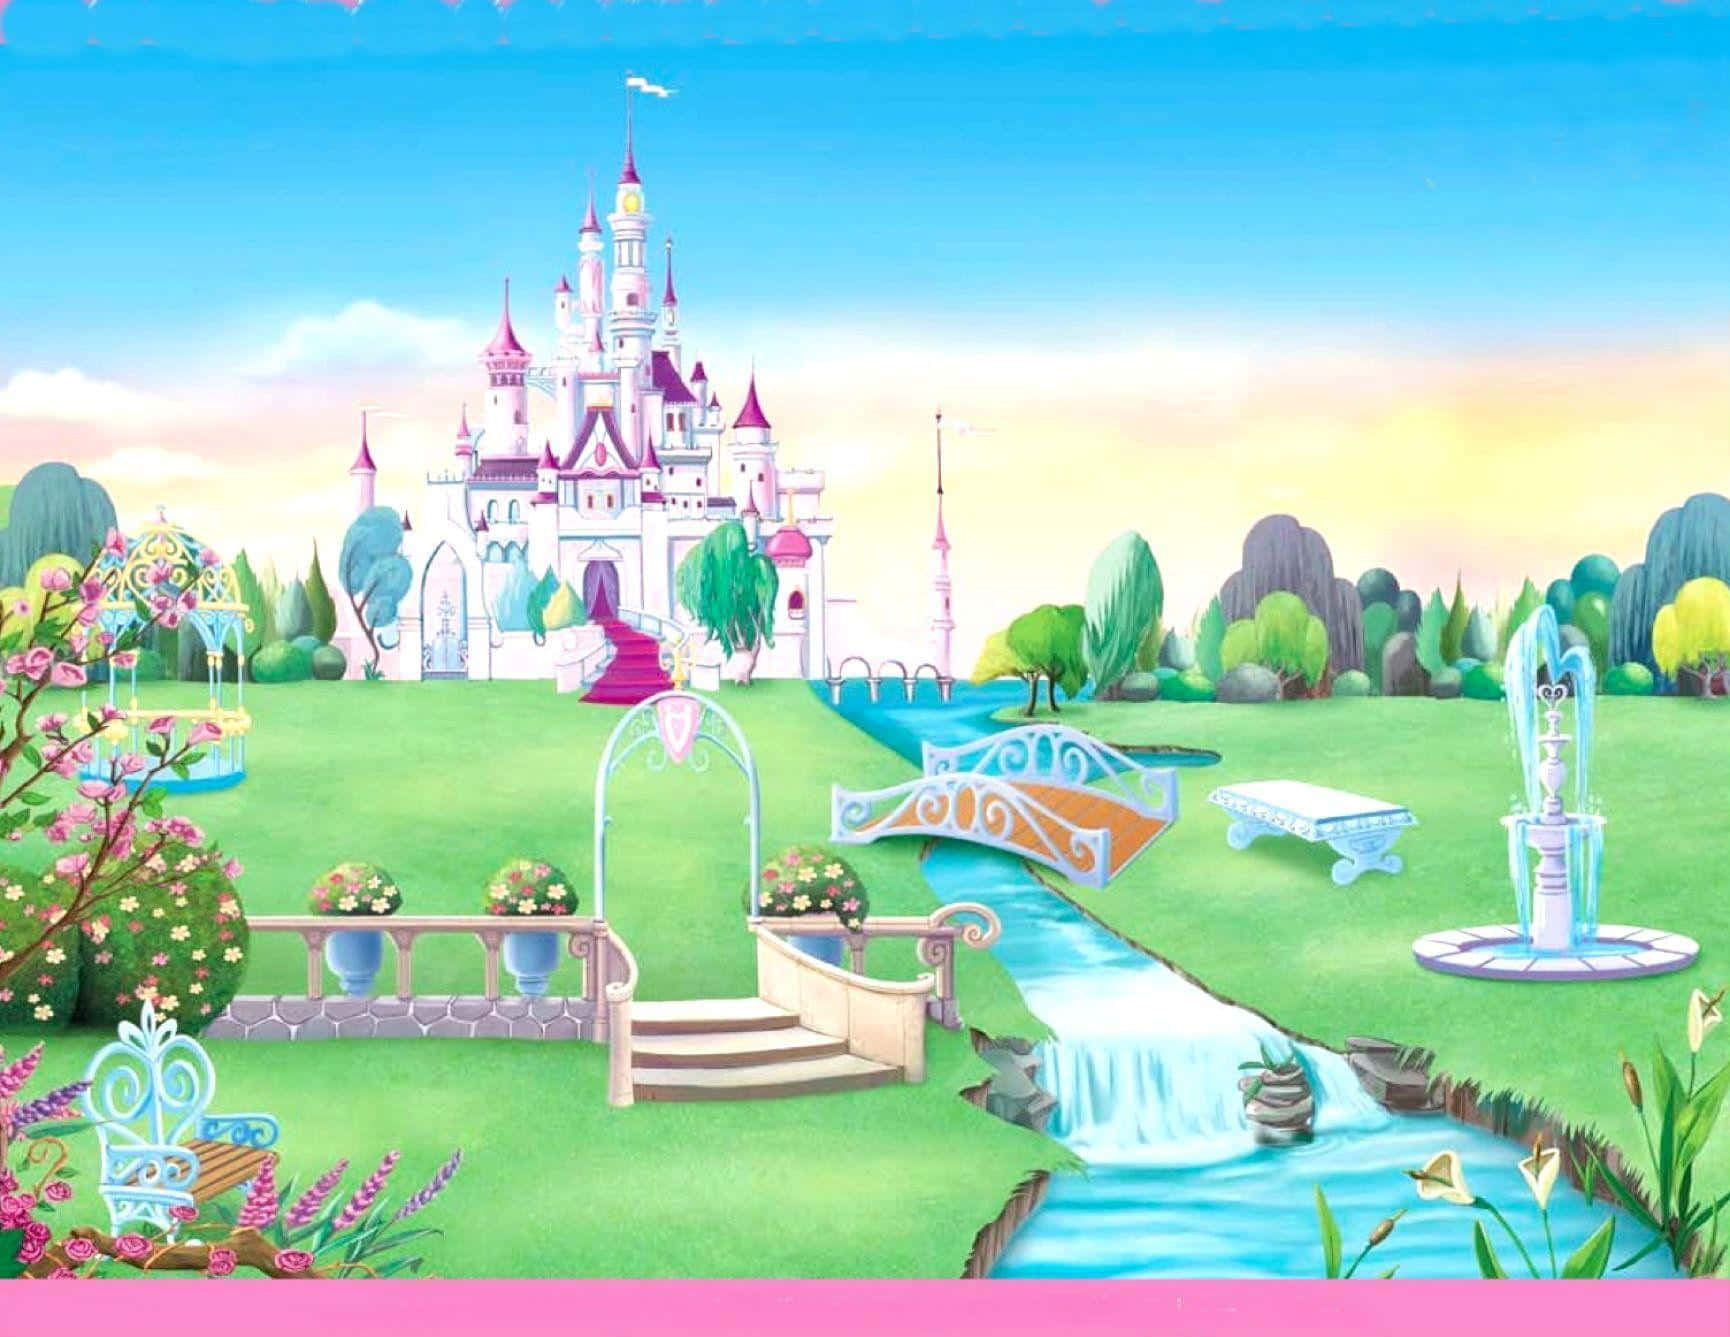 Live Your Dreams at the Magnificent Disney Castle